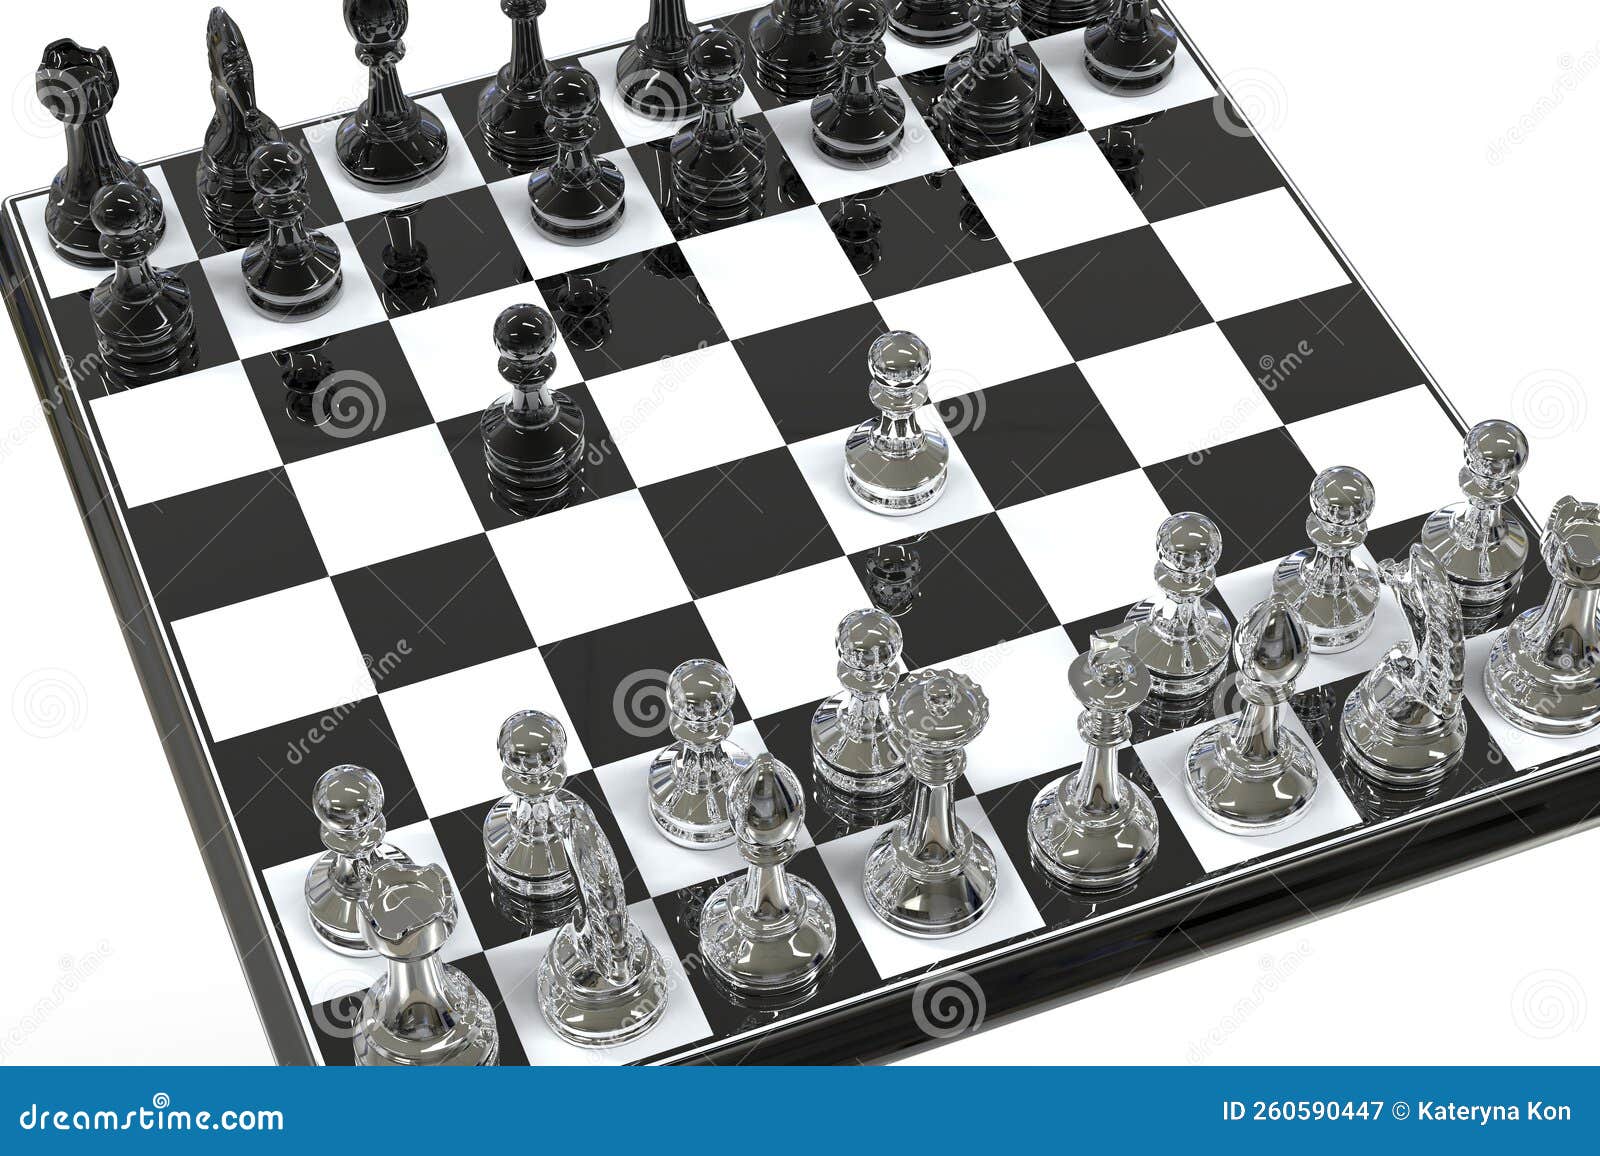 Defesa Siciliana: curiosidades sobre esta abertura do xadrez